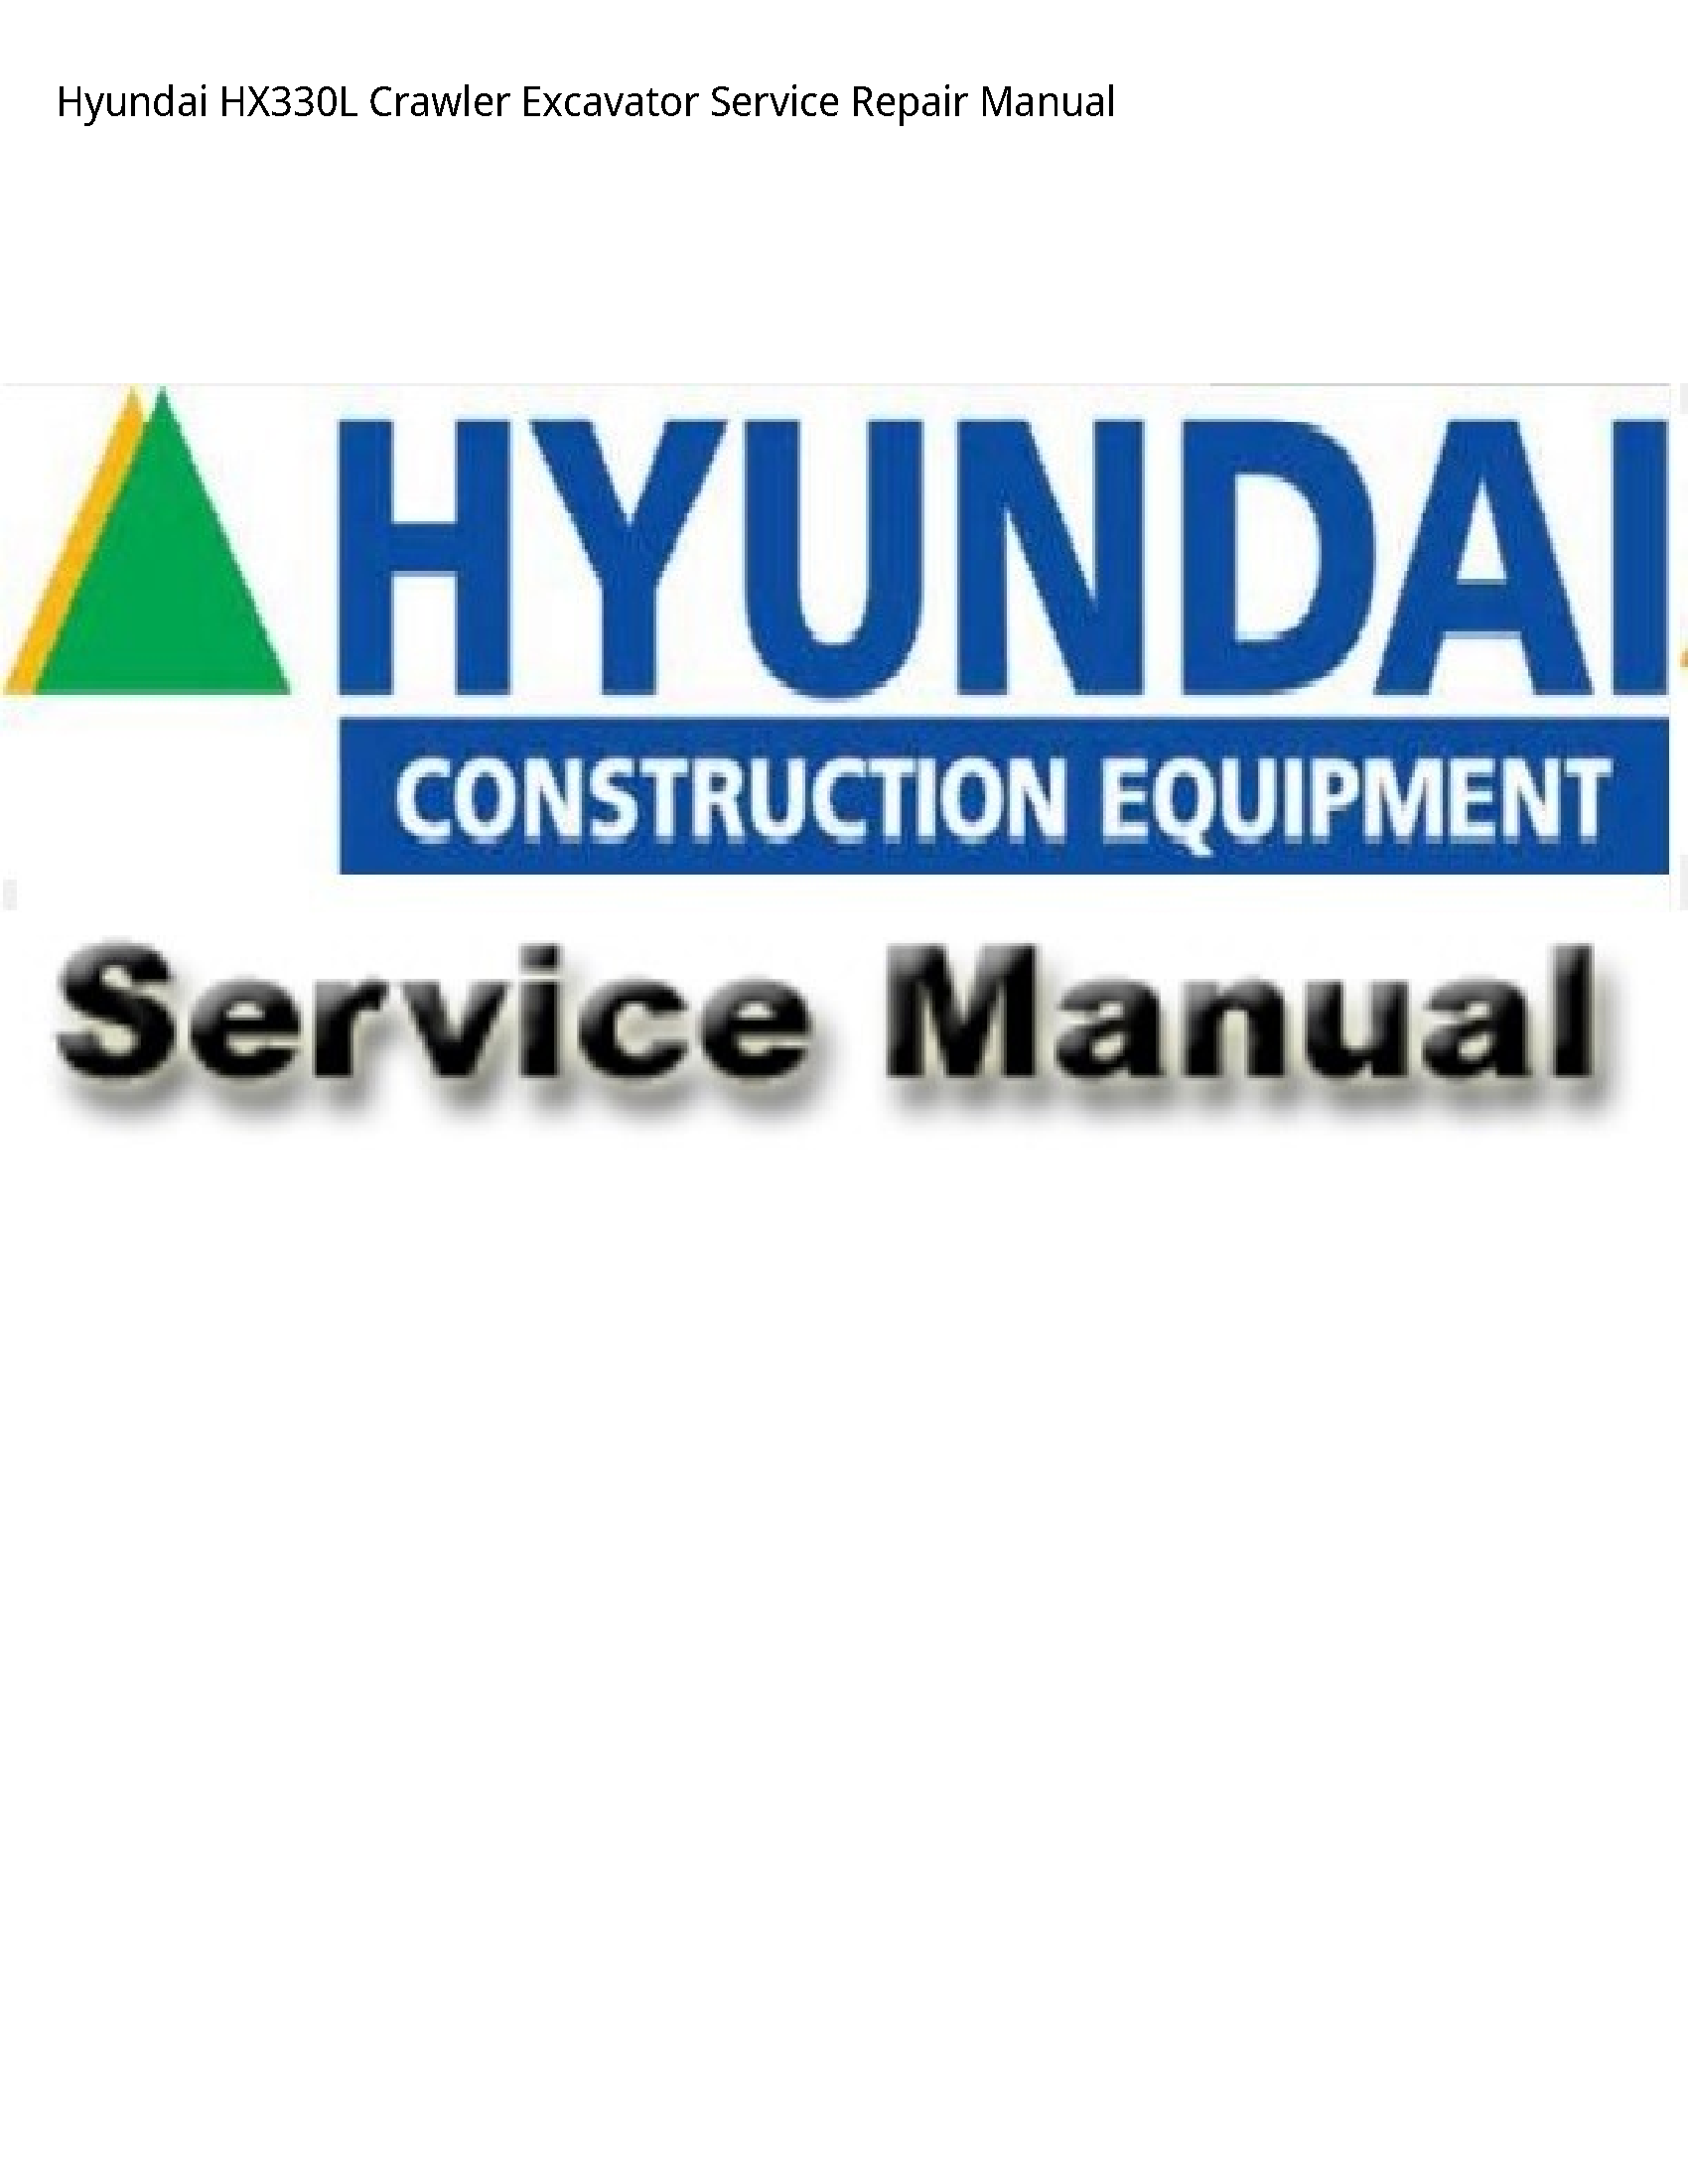 Hyundai HX330L Crawler Excavator manual